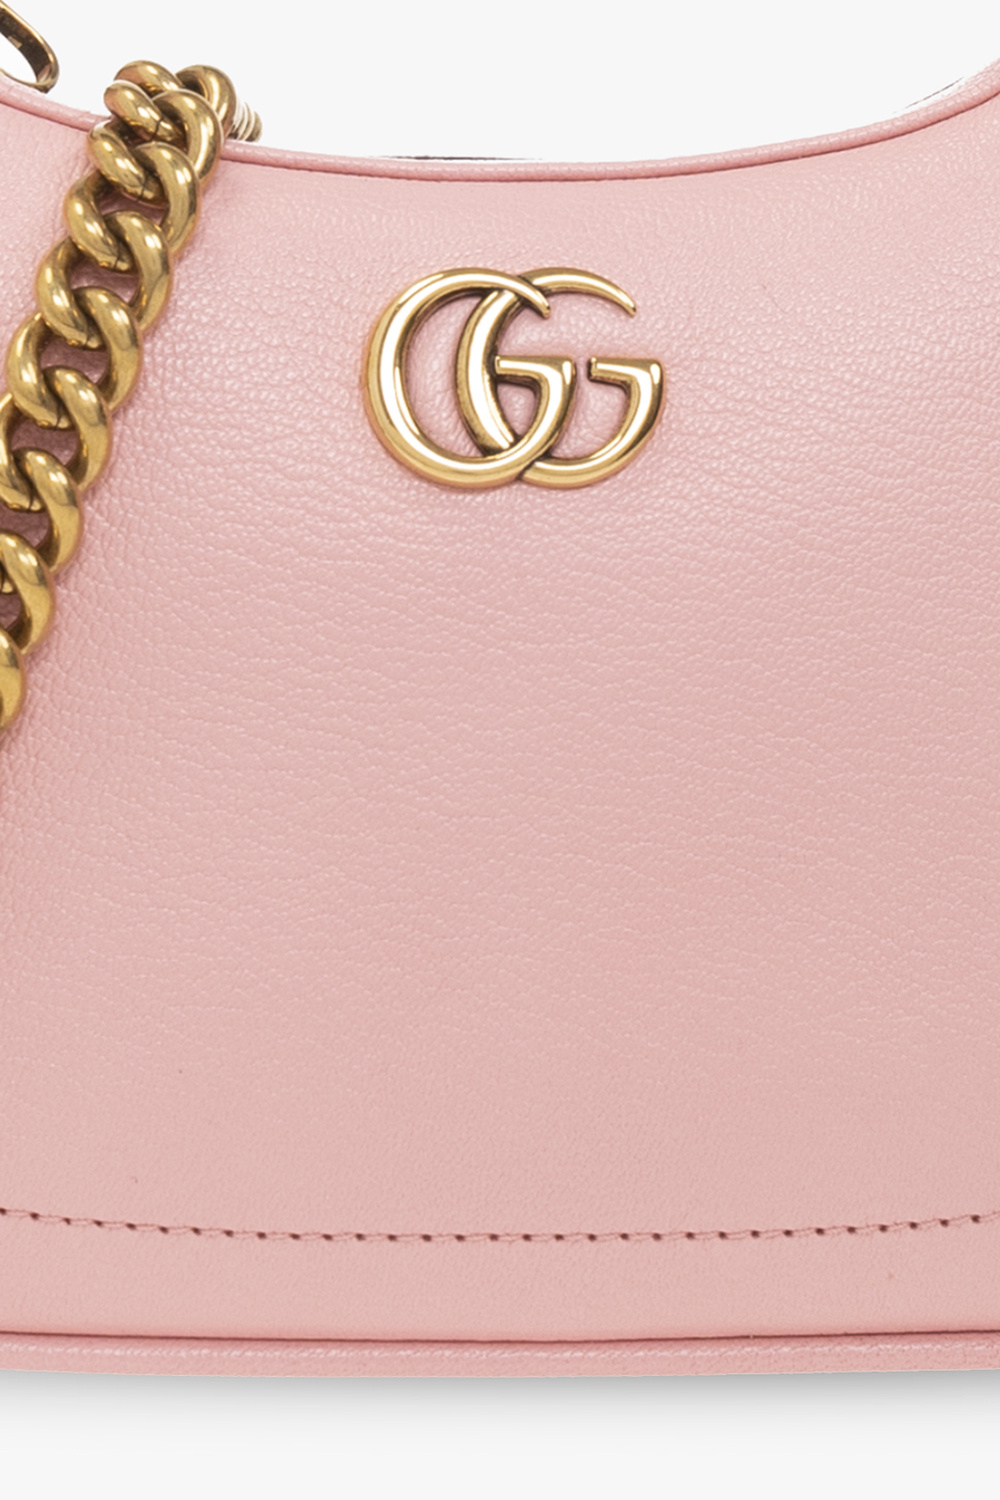 Gucci Aphrodite Small Leather Shoulder Bag - Pink